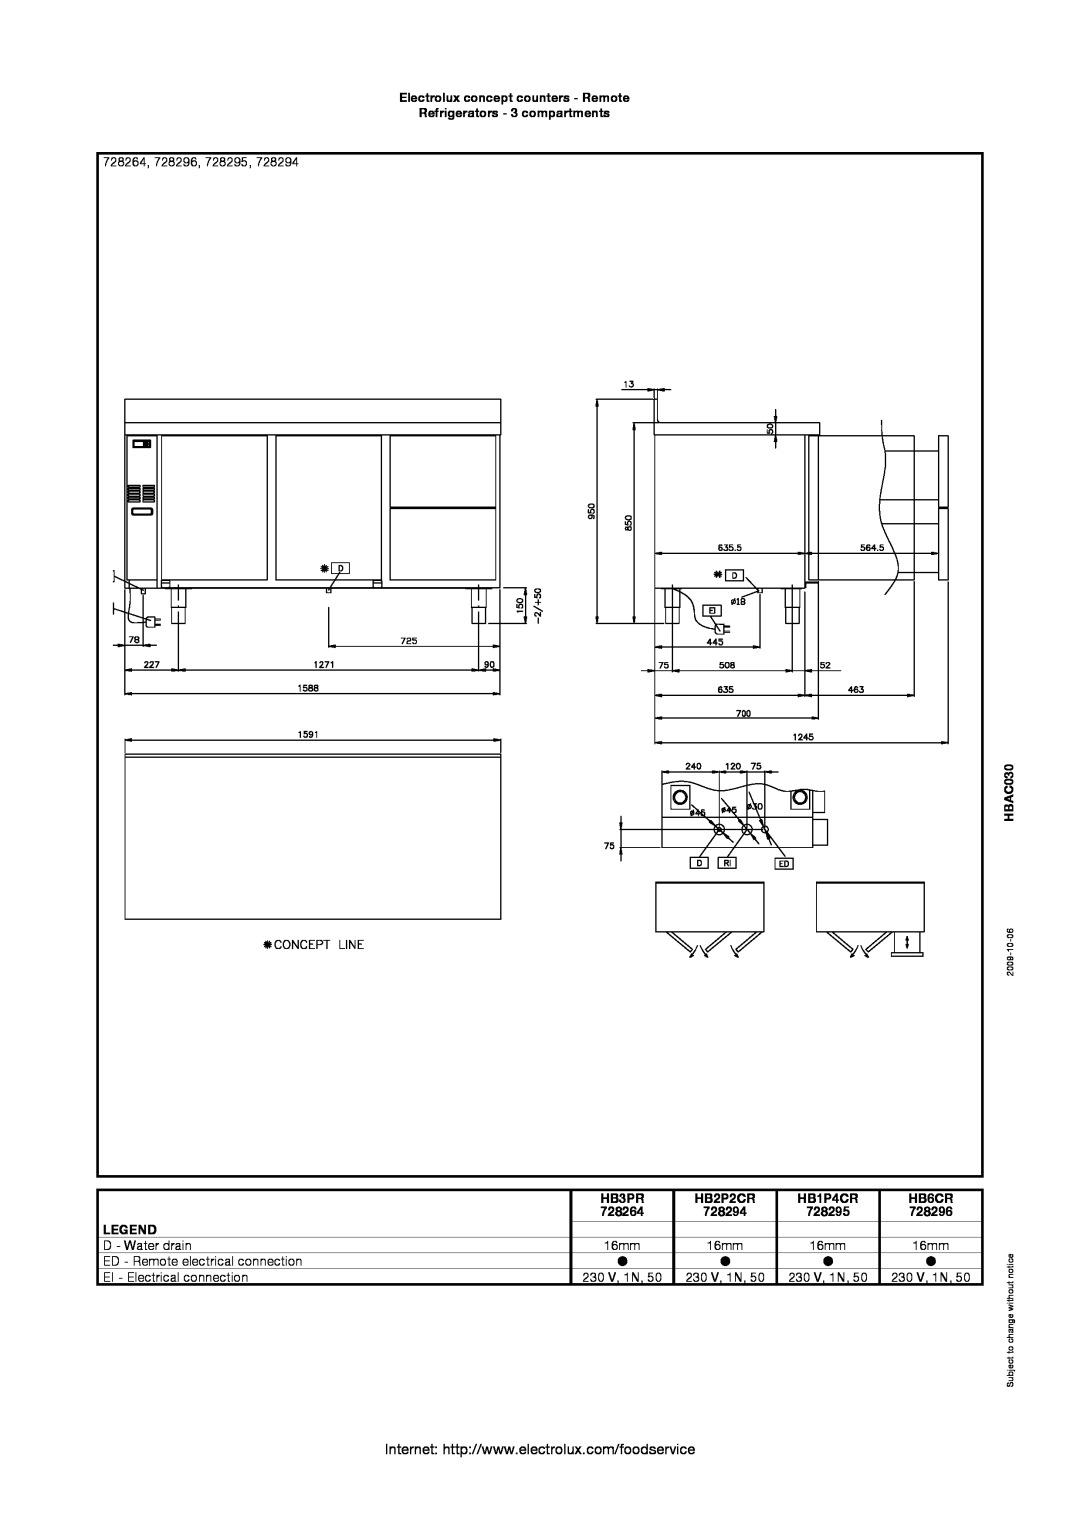 Electrolux 728295 HB3PR, HB2P2CR, HB1P4CR, HB6CR, Electrolux concept counters - Remote Refrigerators - 3 compartments 